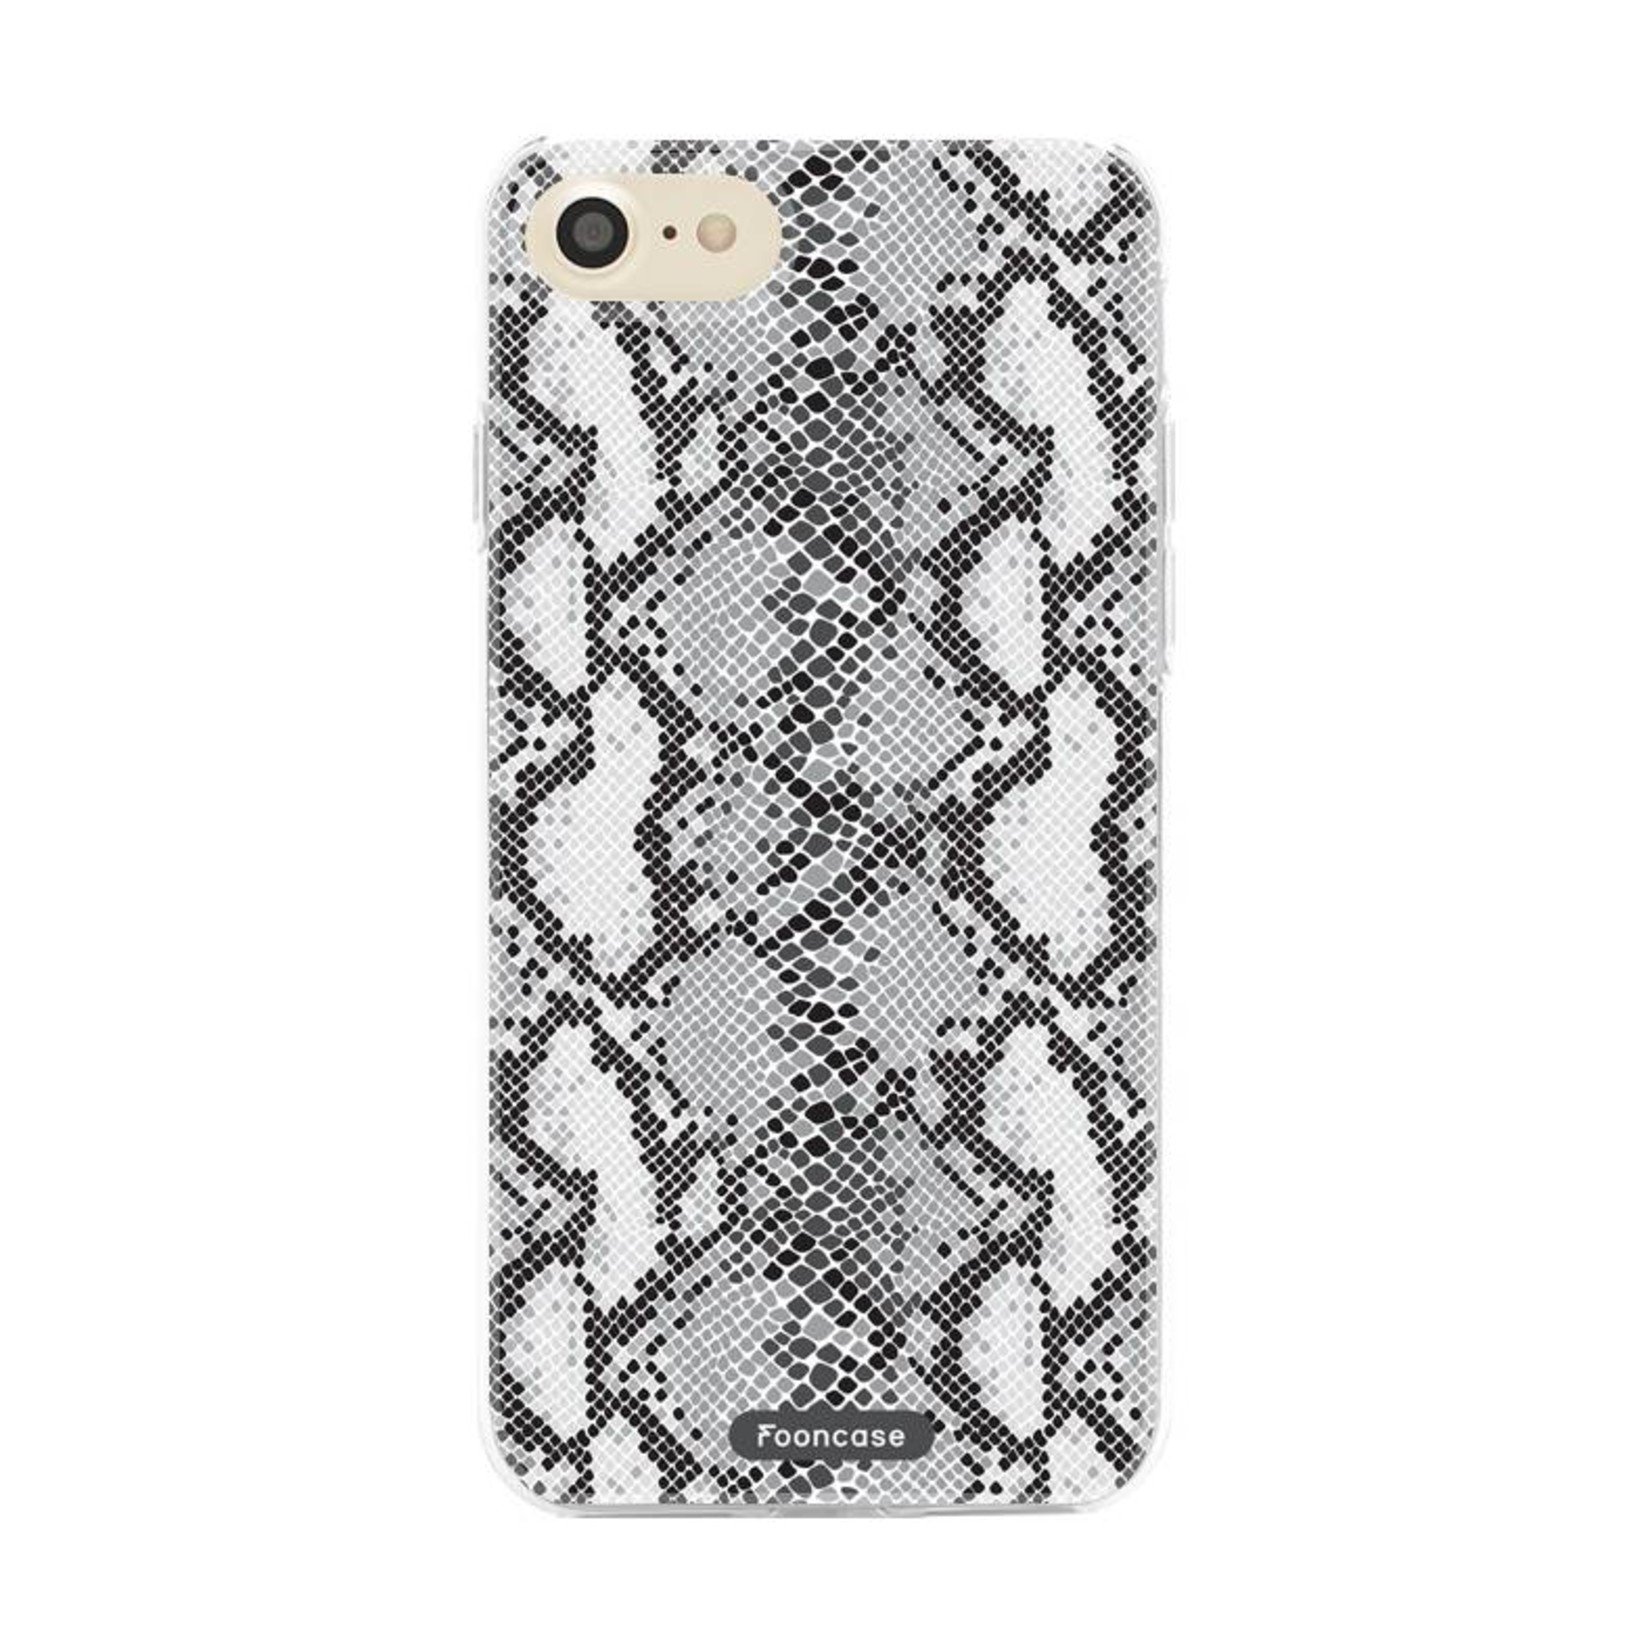 FOONCASE iPhone 7 hoesje TPU Soft Case - Back Cover - Snake it / Slangen print